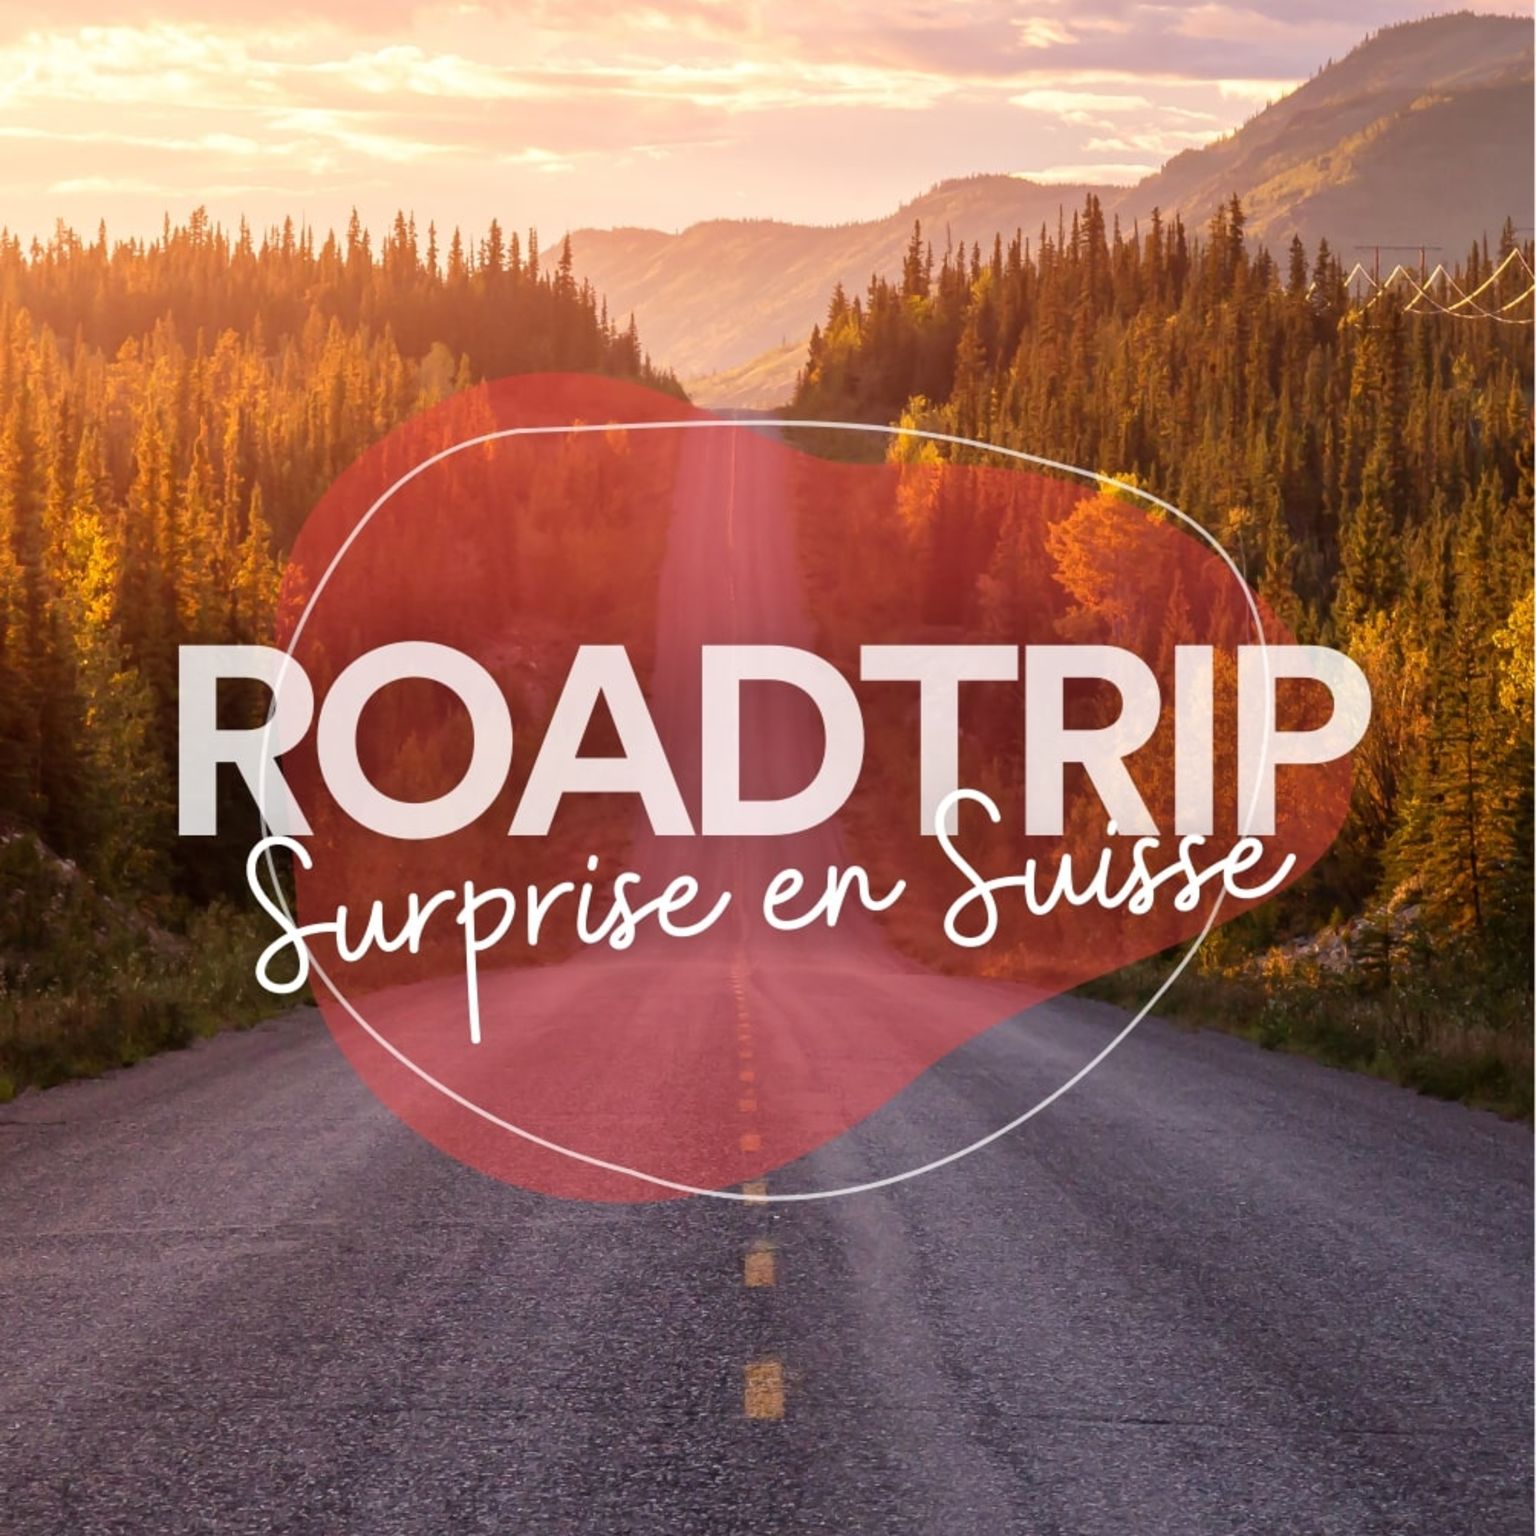 One-day Surprise Roadtrip